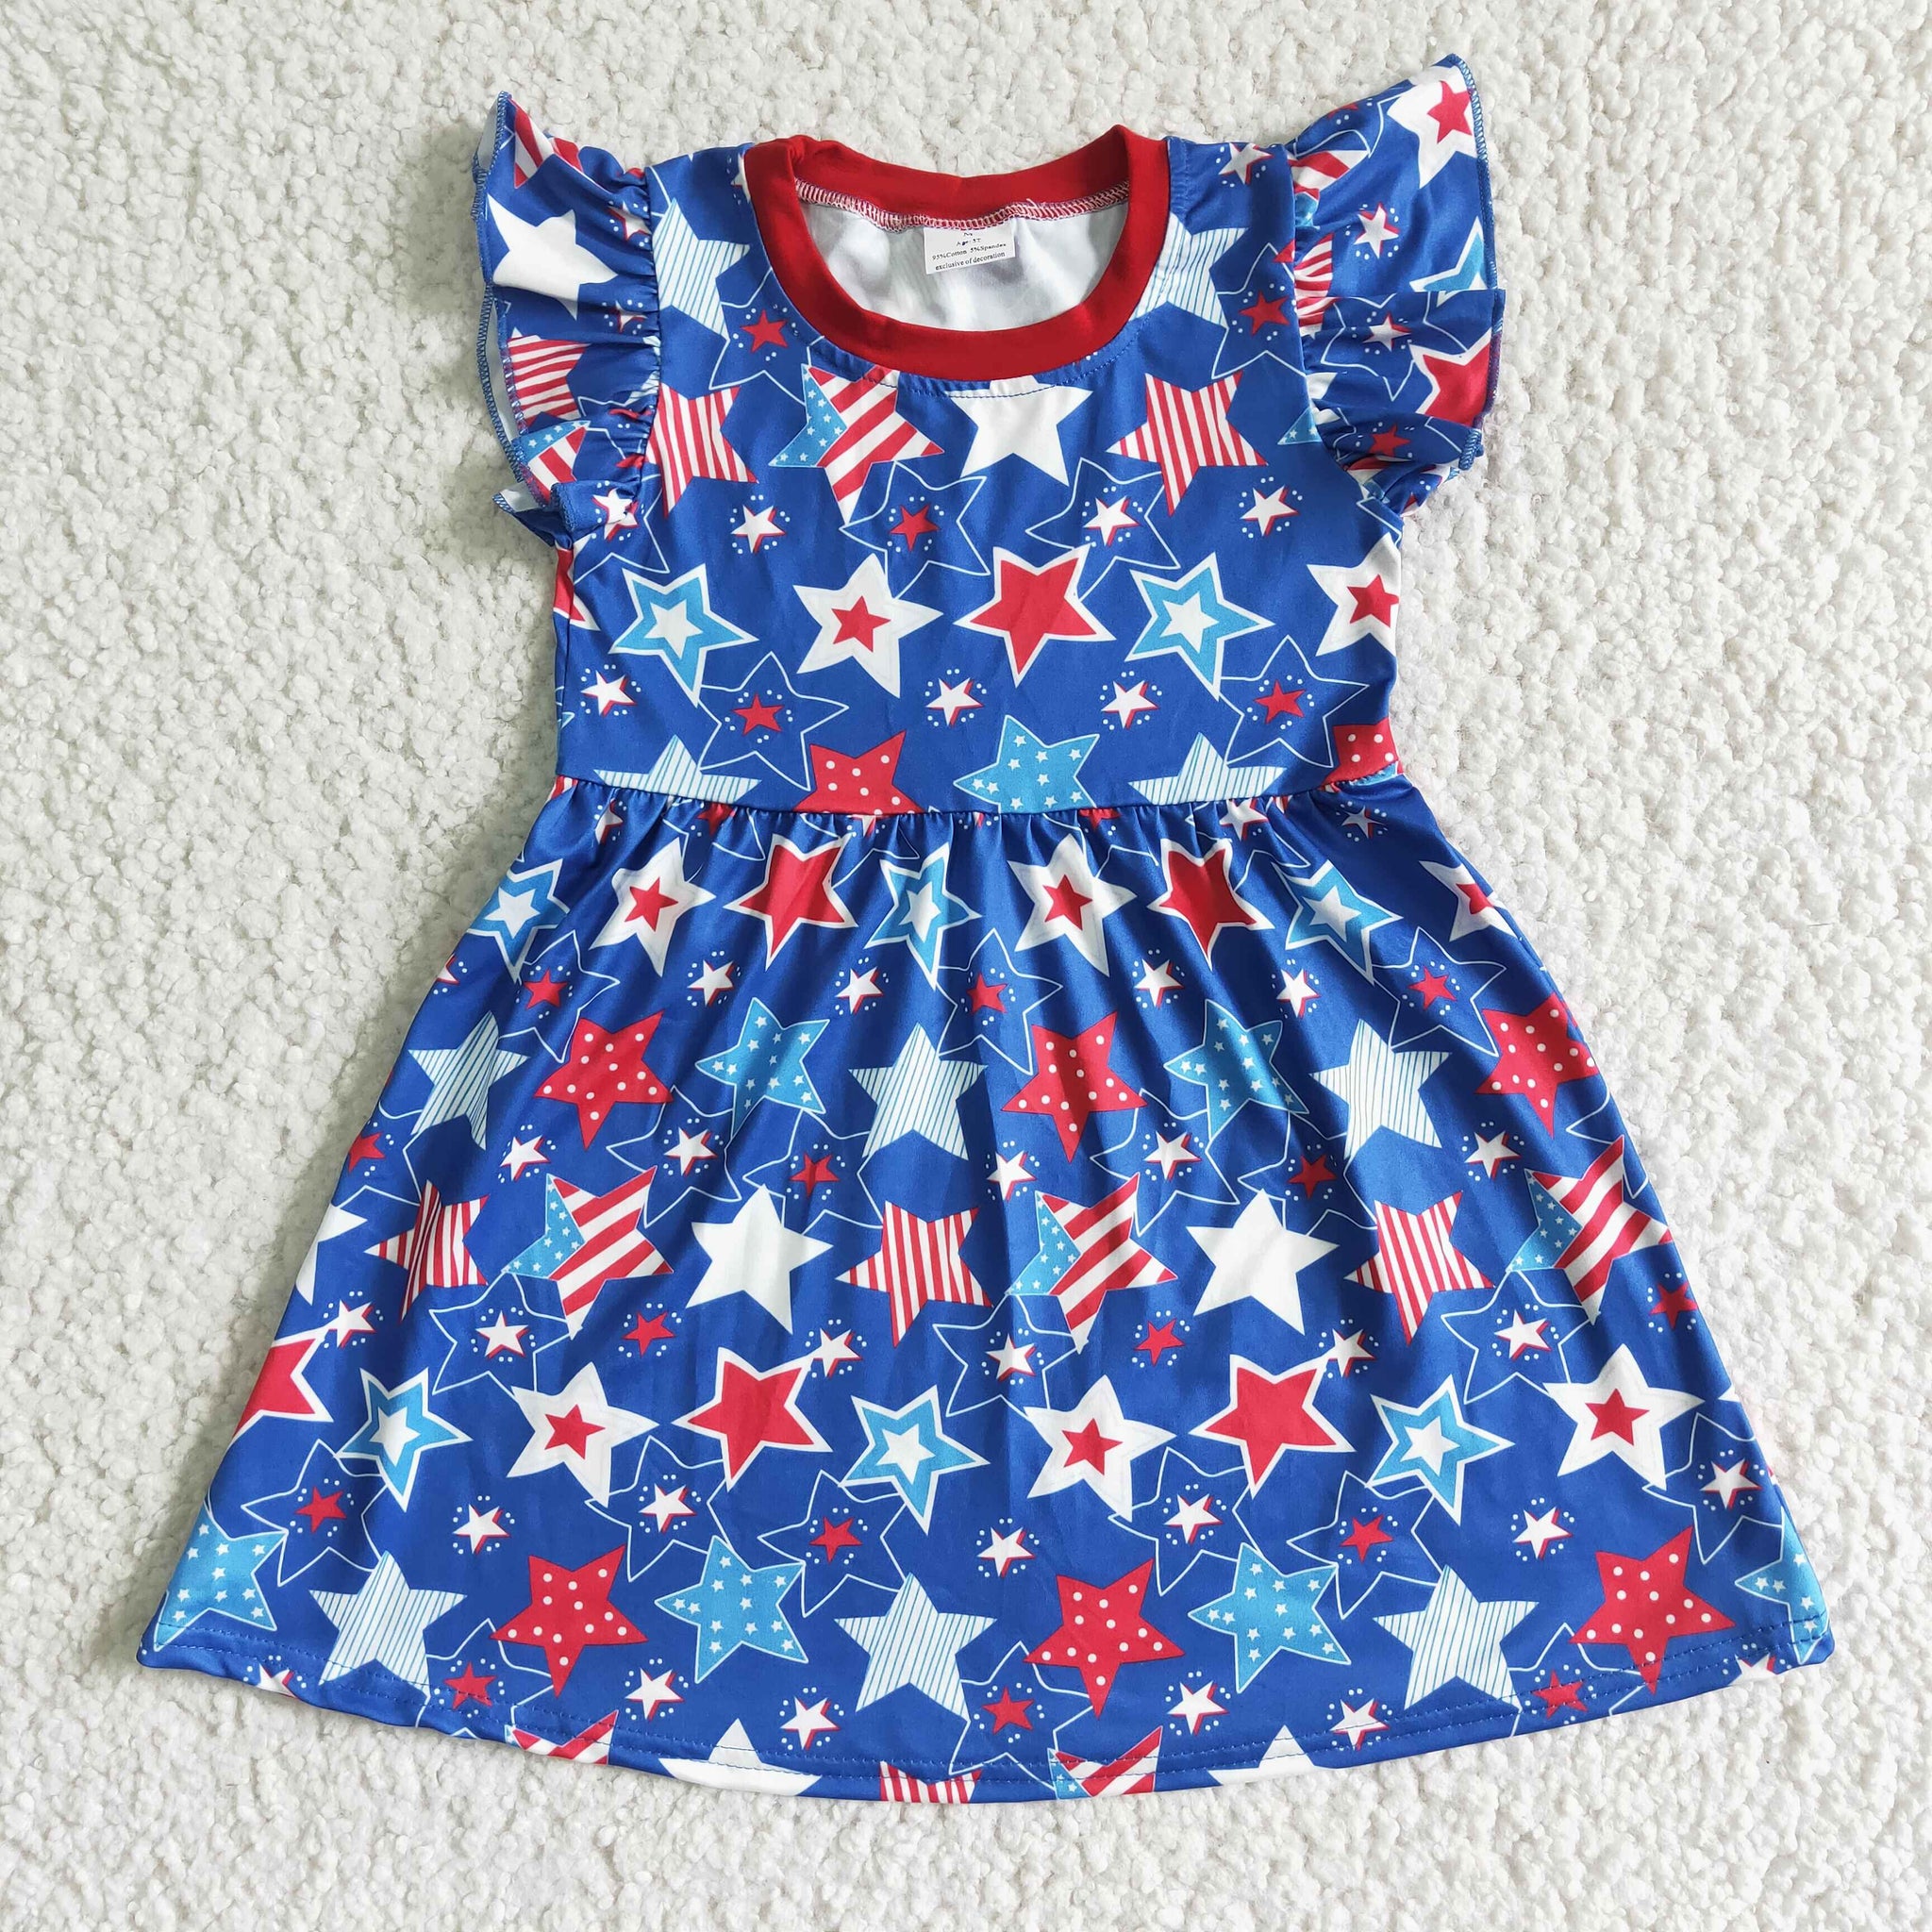 C11-9 kids clothes July 4th star dress